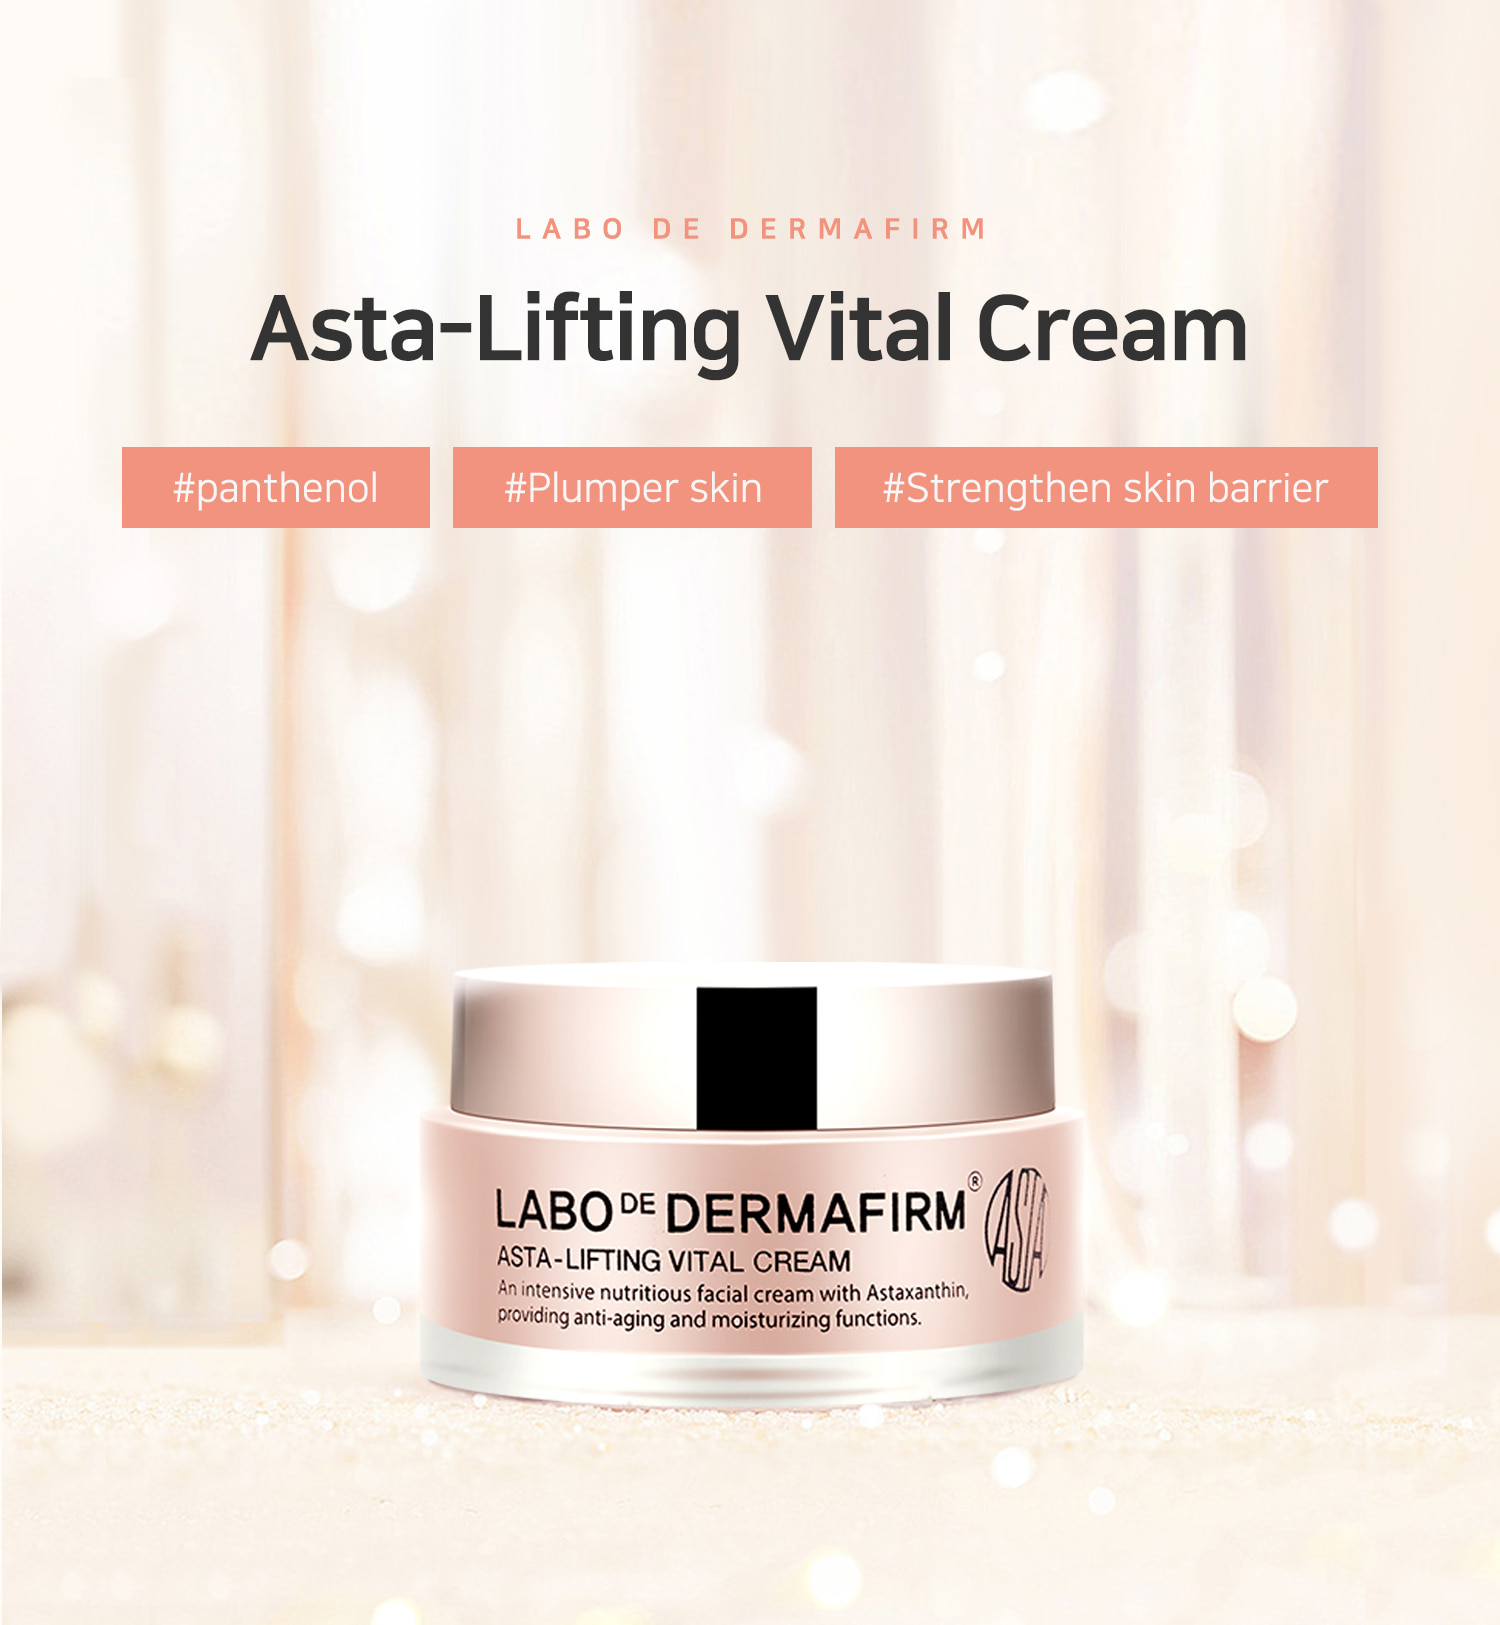 Asta-Lifting Vital Cream